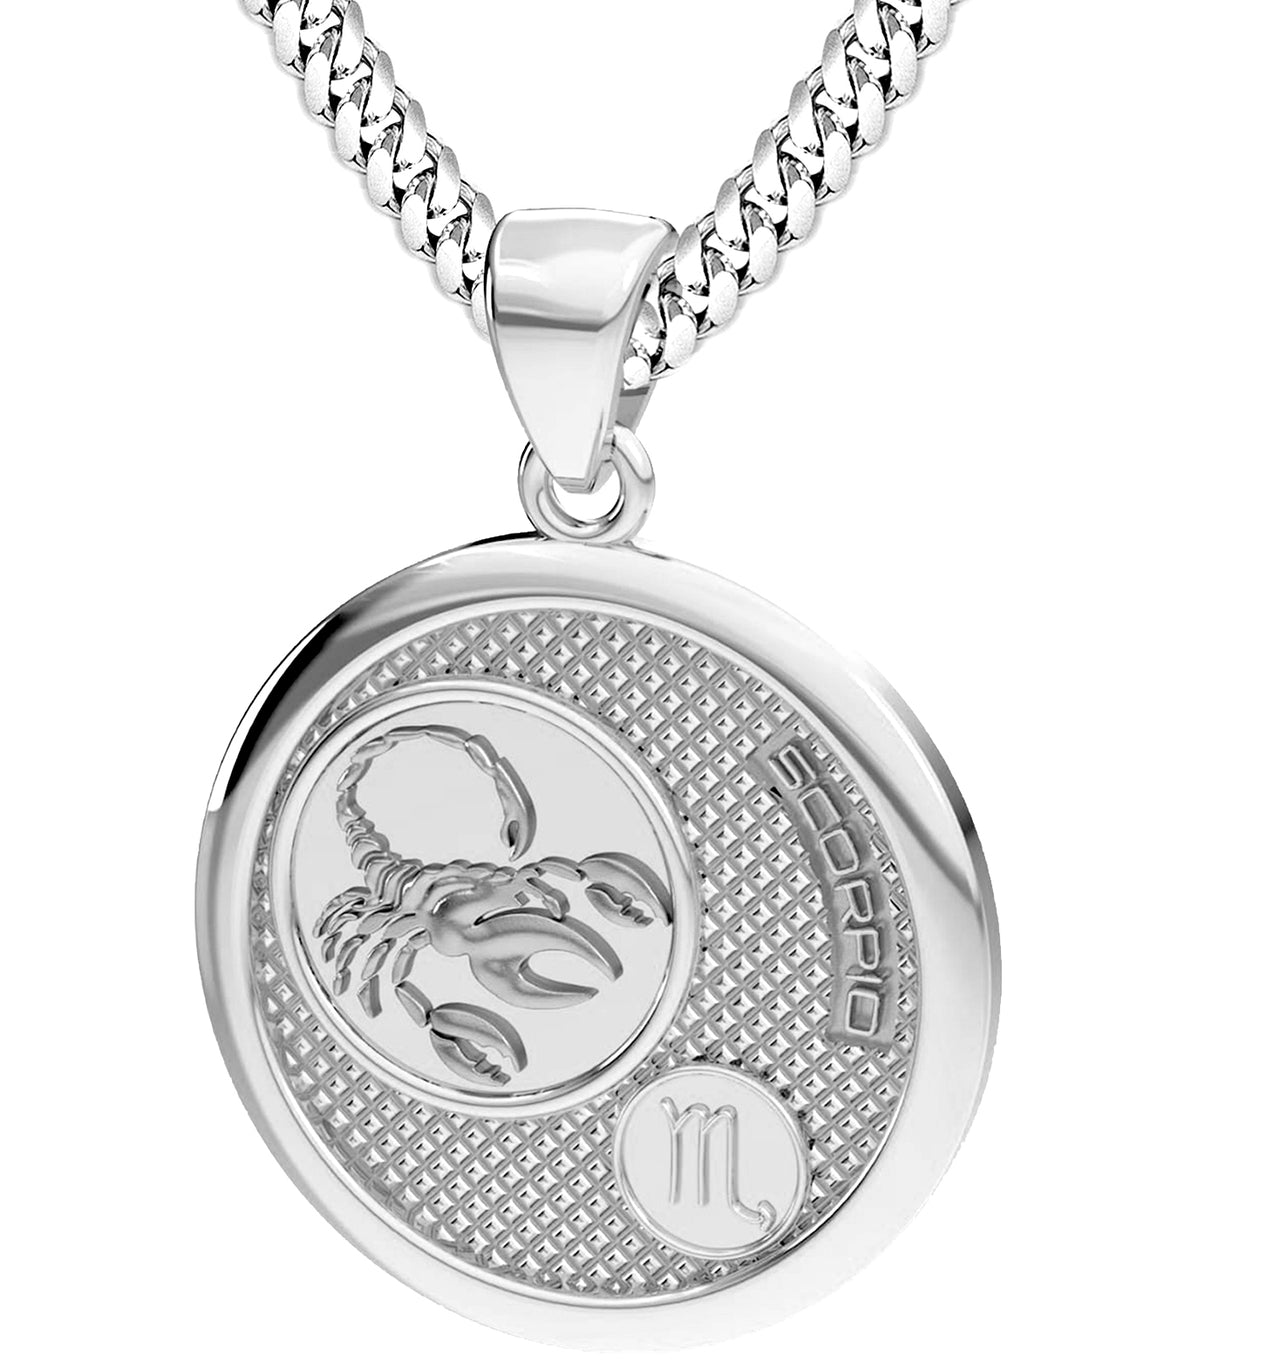 Men's 925 Sterling Silver Round Scorpio Zodiac Polished Finish Pendant Necklace, 33mm